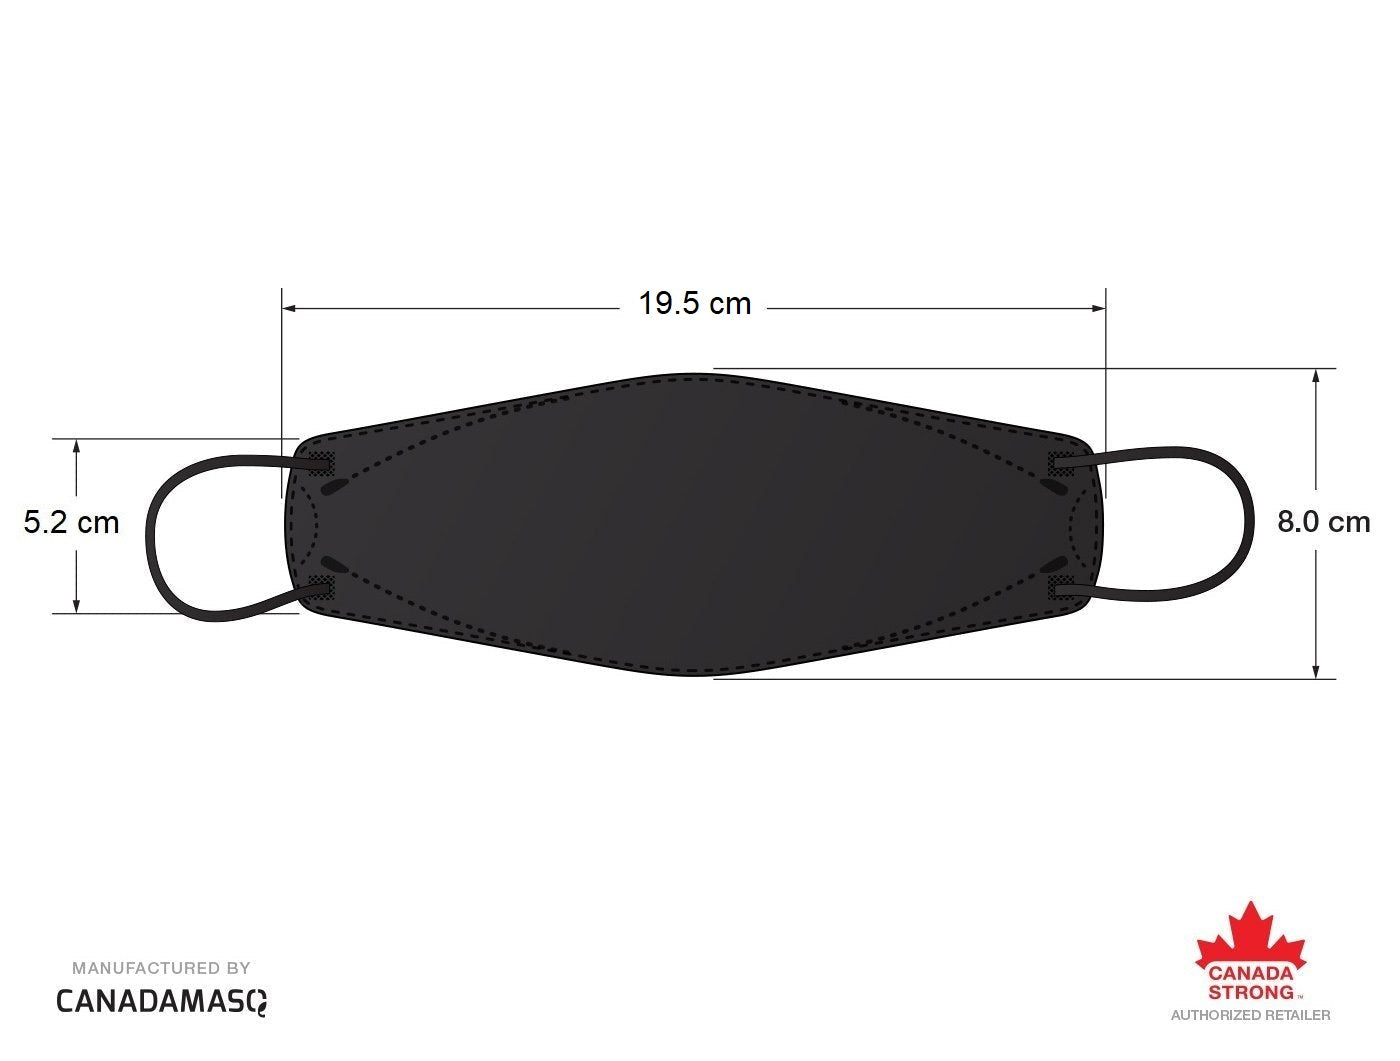 Dimensions of Canada Masq Medium CA-N95 respirator mask